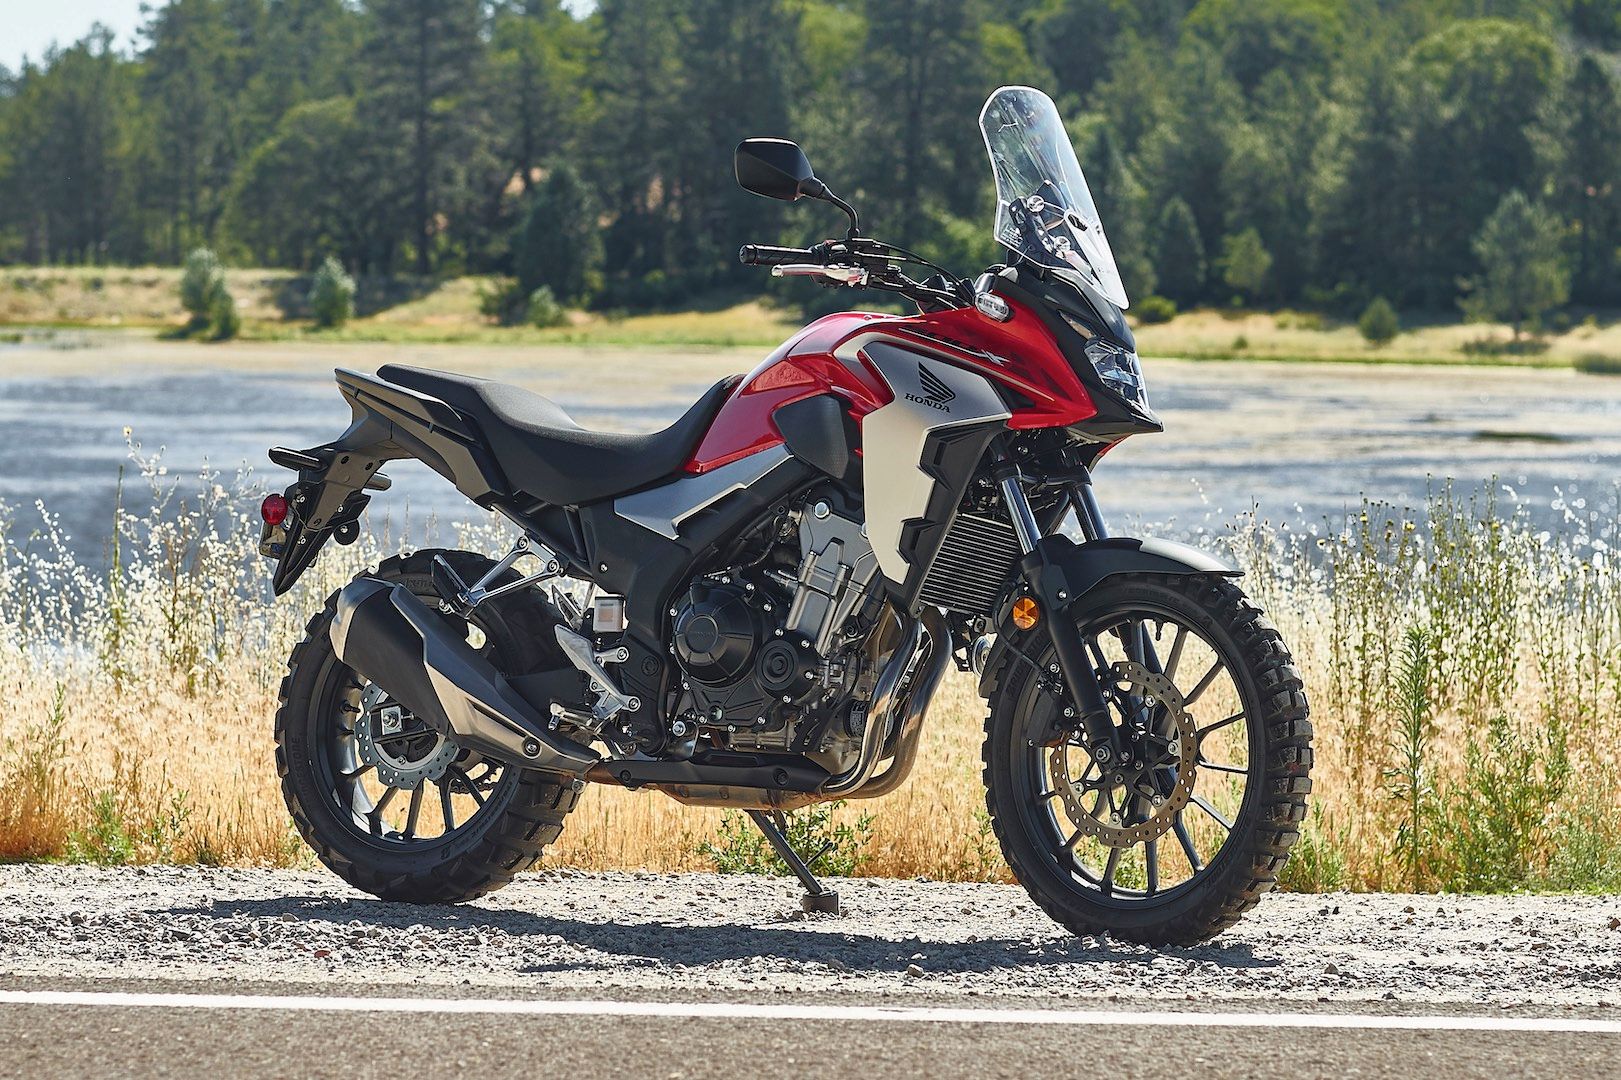 2019-Honda-CB500X-Review-ADV-Adventure-motorcycle-10